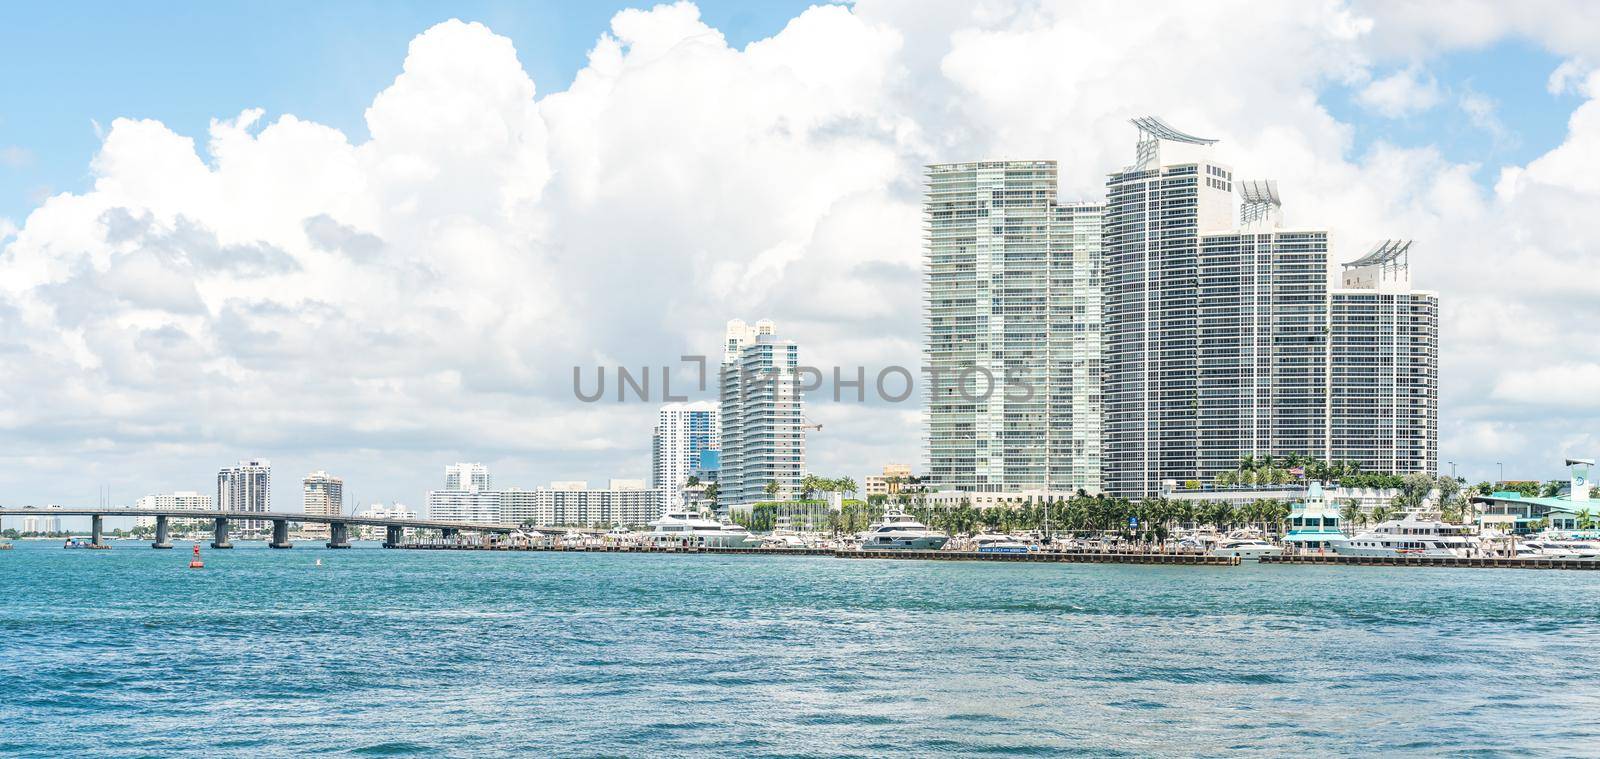 Miami, USA - September 11, 2019: Miami skyline with skyscrapers and bridge over sea by Mariakray